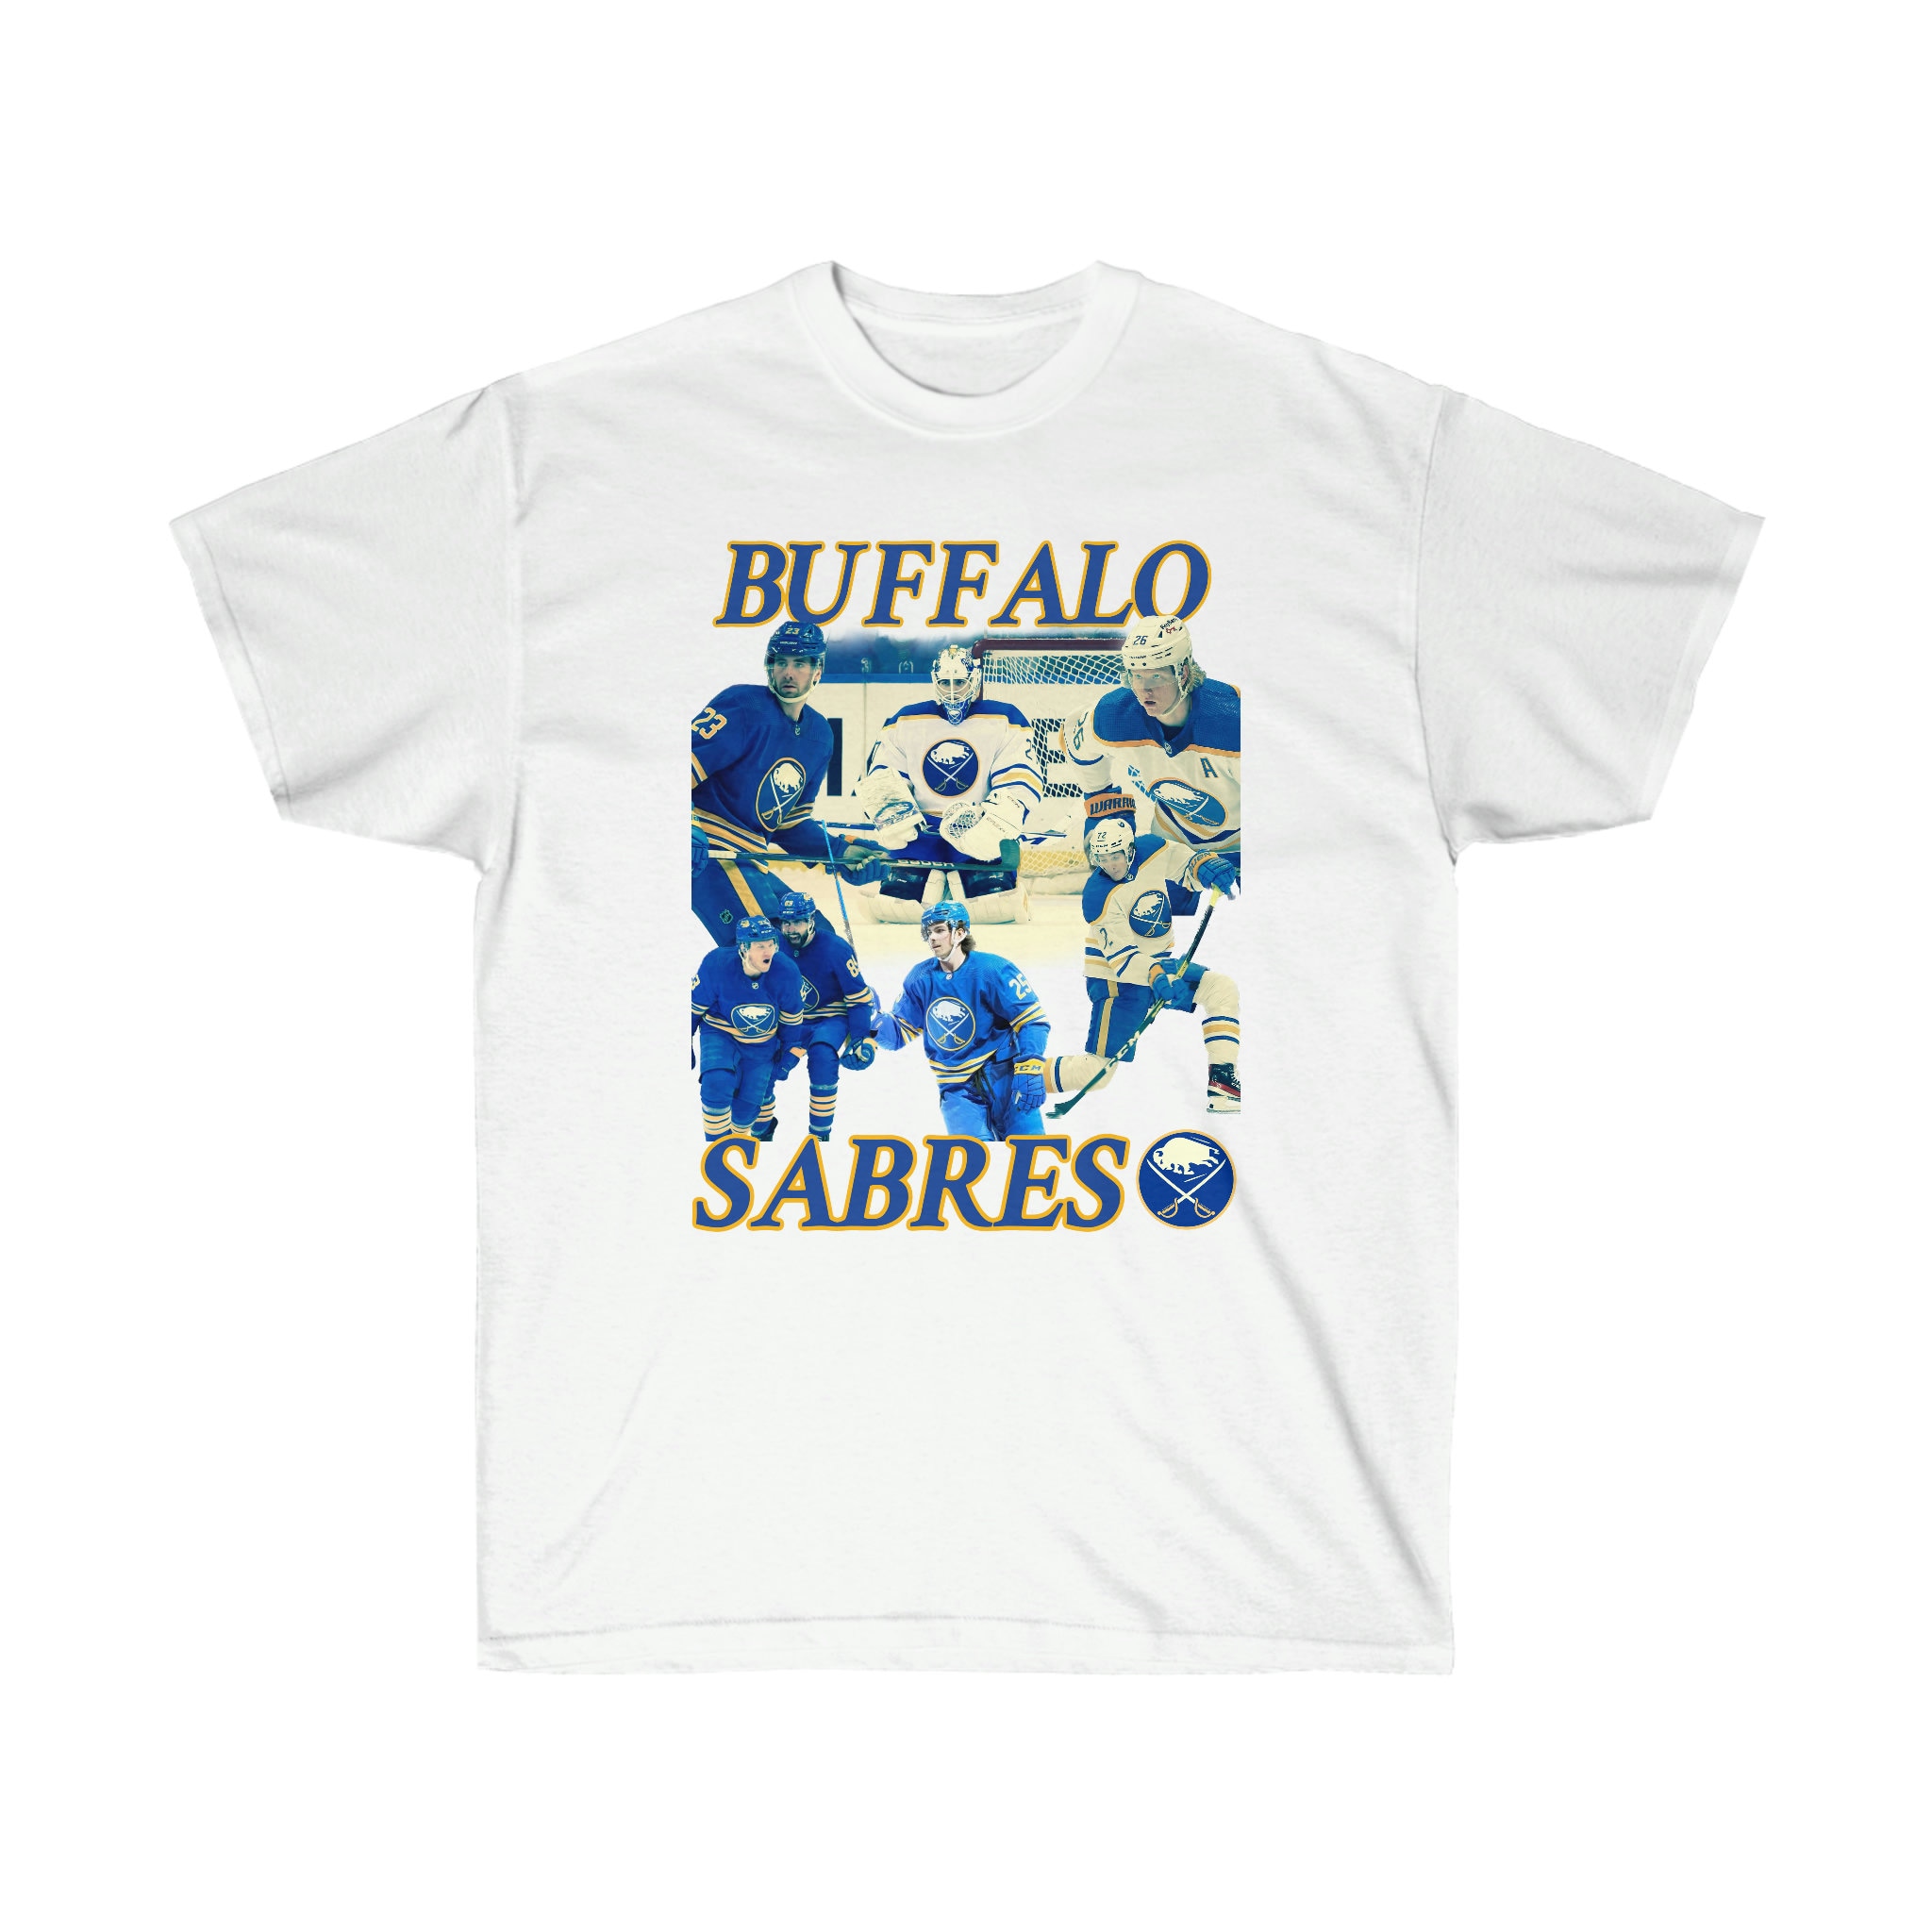 Fanatics NHL Women's Buffalo Sabres Vintage Navy Tri-Blend T-Shirt, Large, Blue